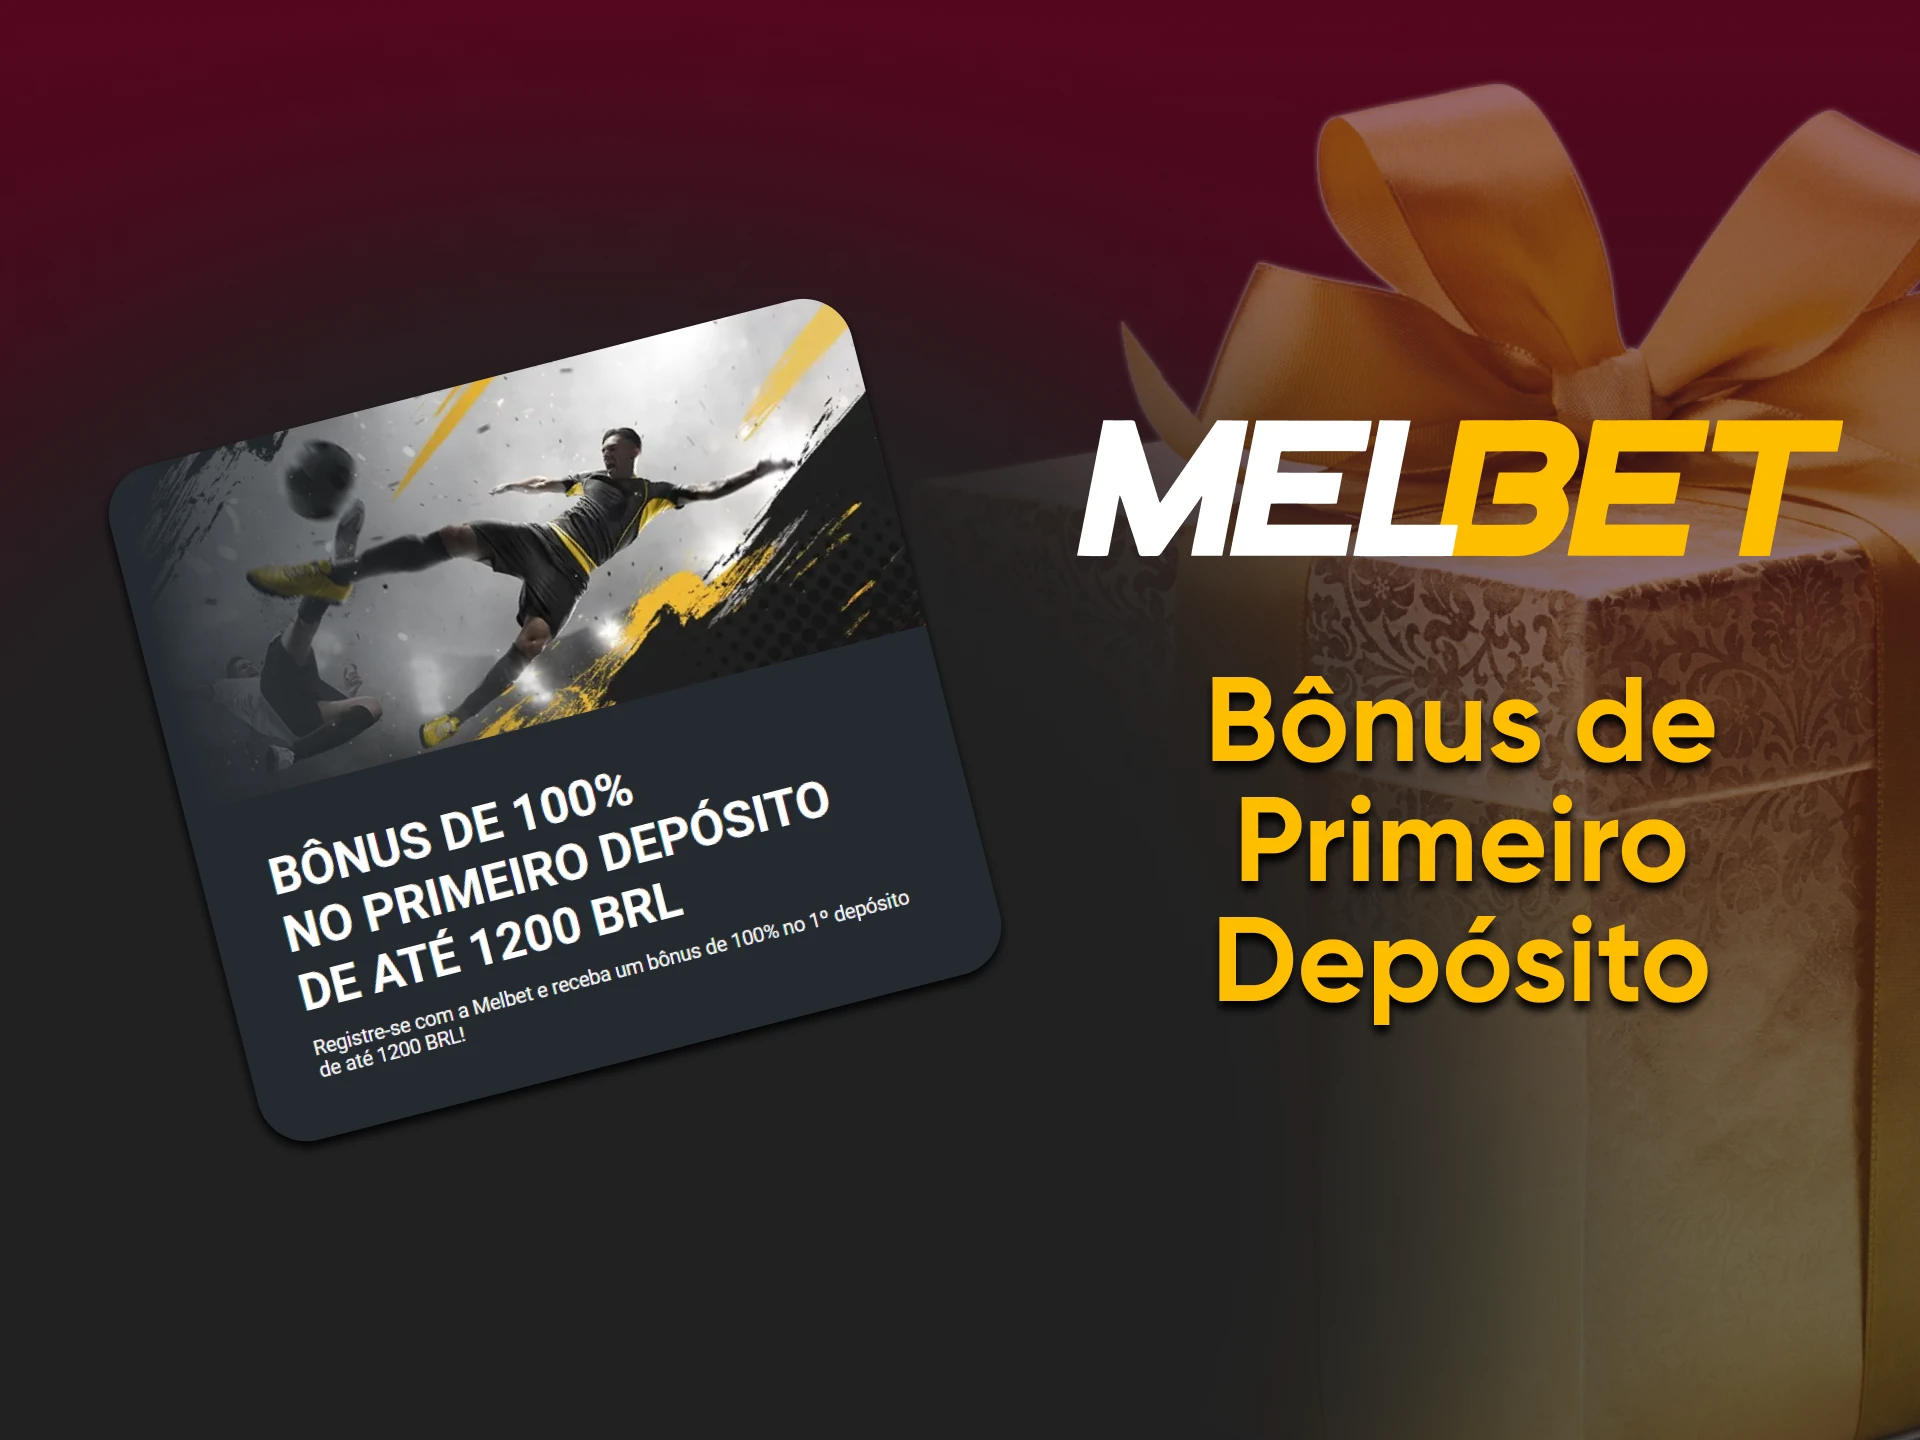 To receive the first Melbet bonus, make a deposit.